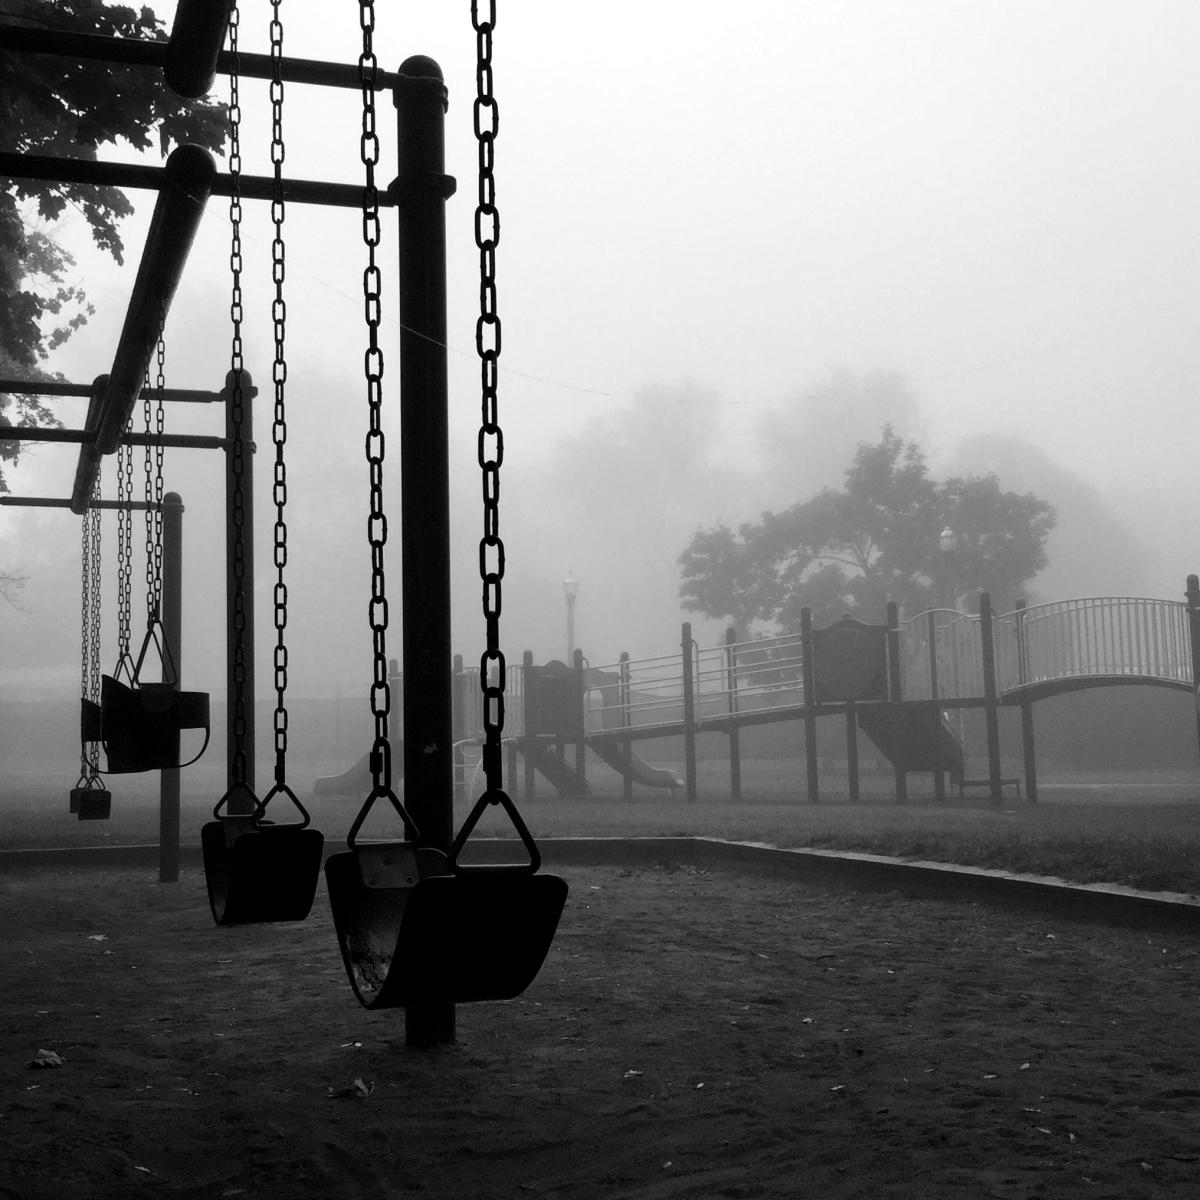 creepy playground